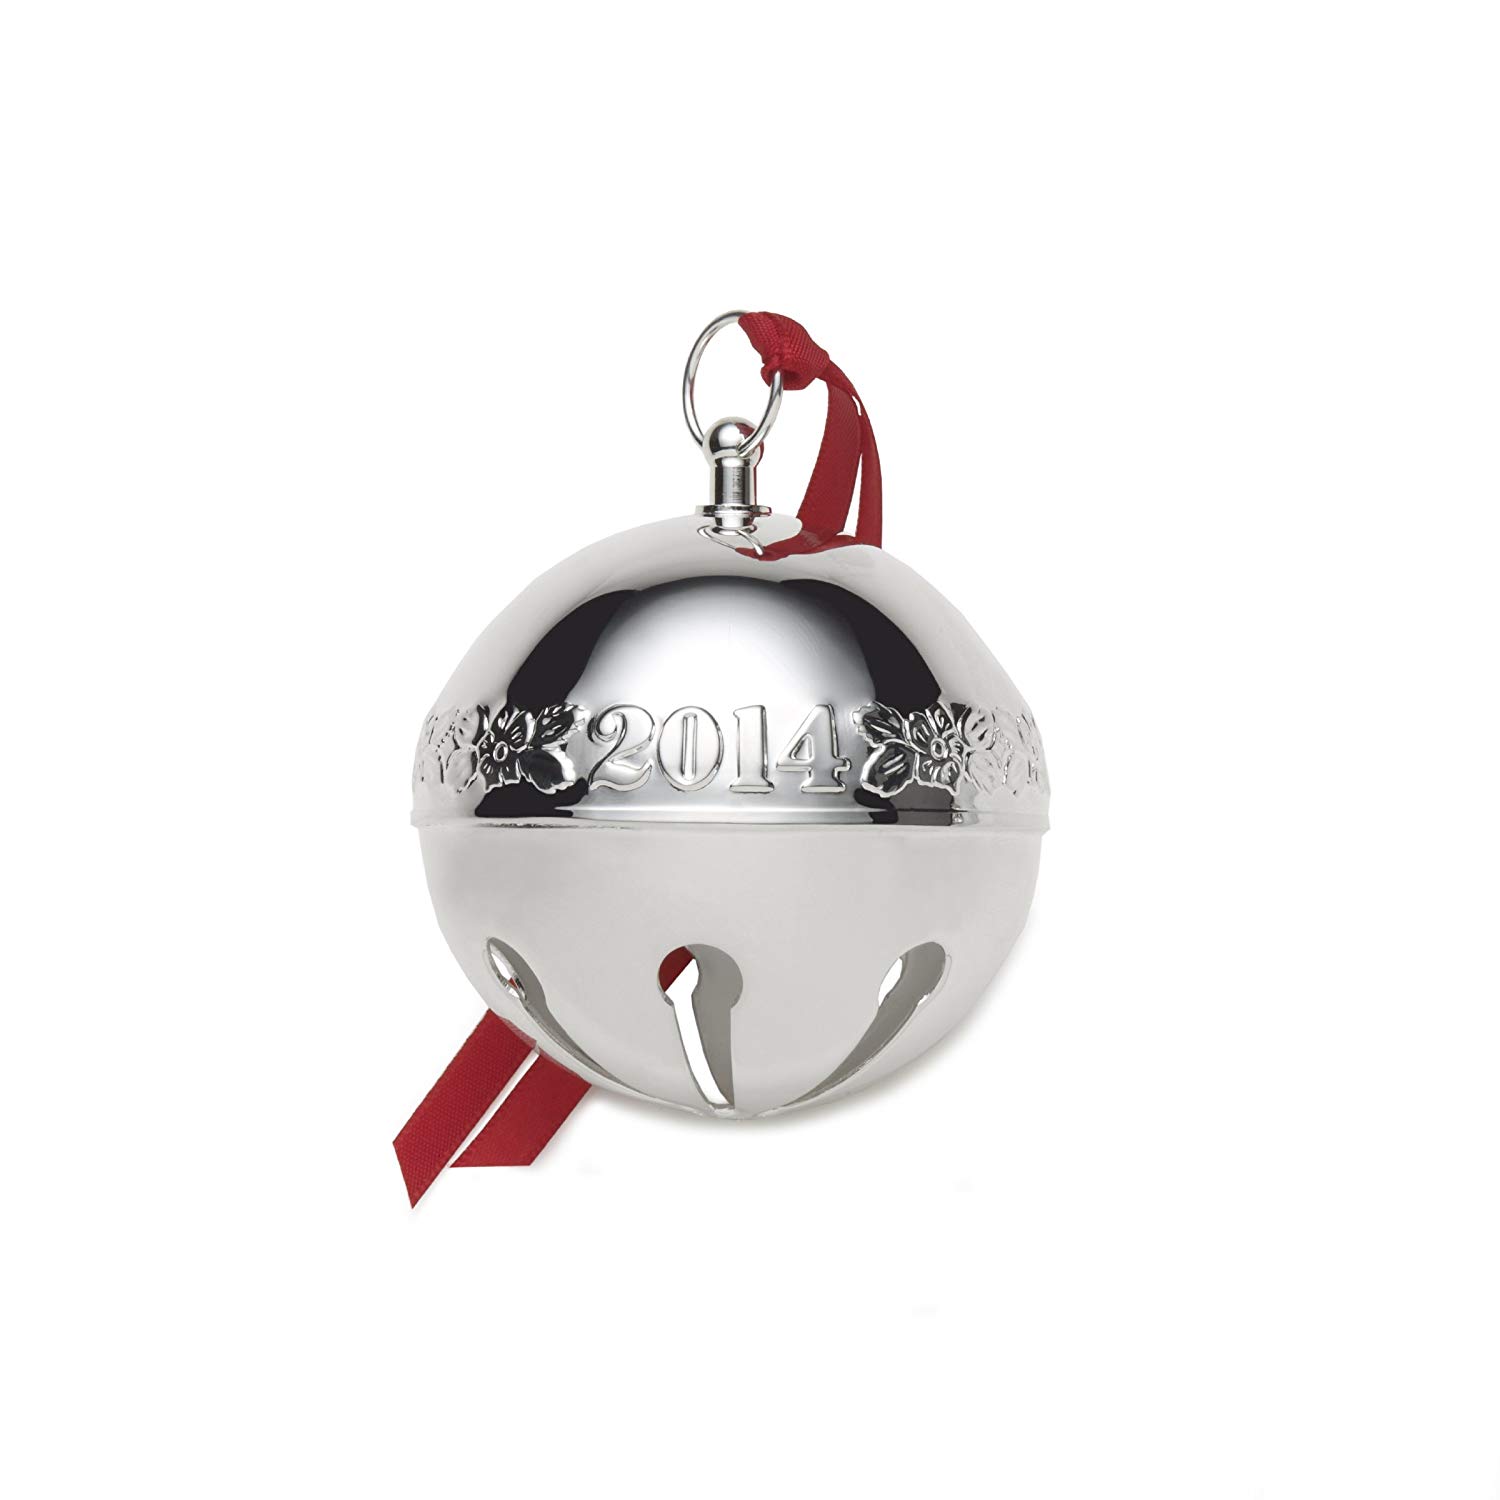 wallace-sleigh-bell-2014-44th-edition-silverplate.jpg